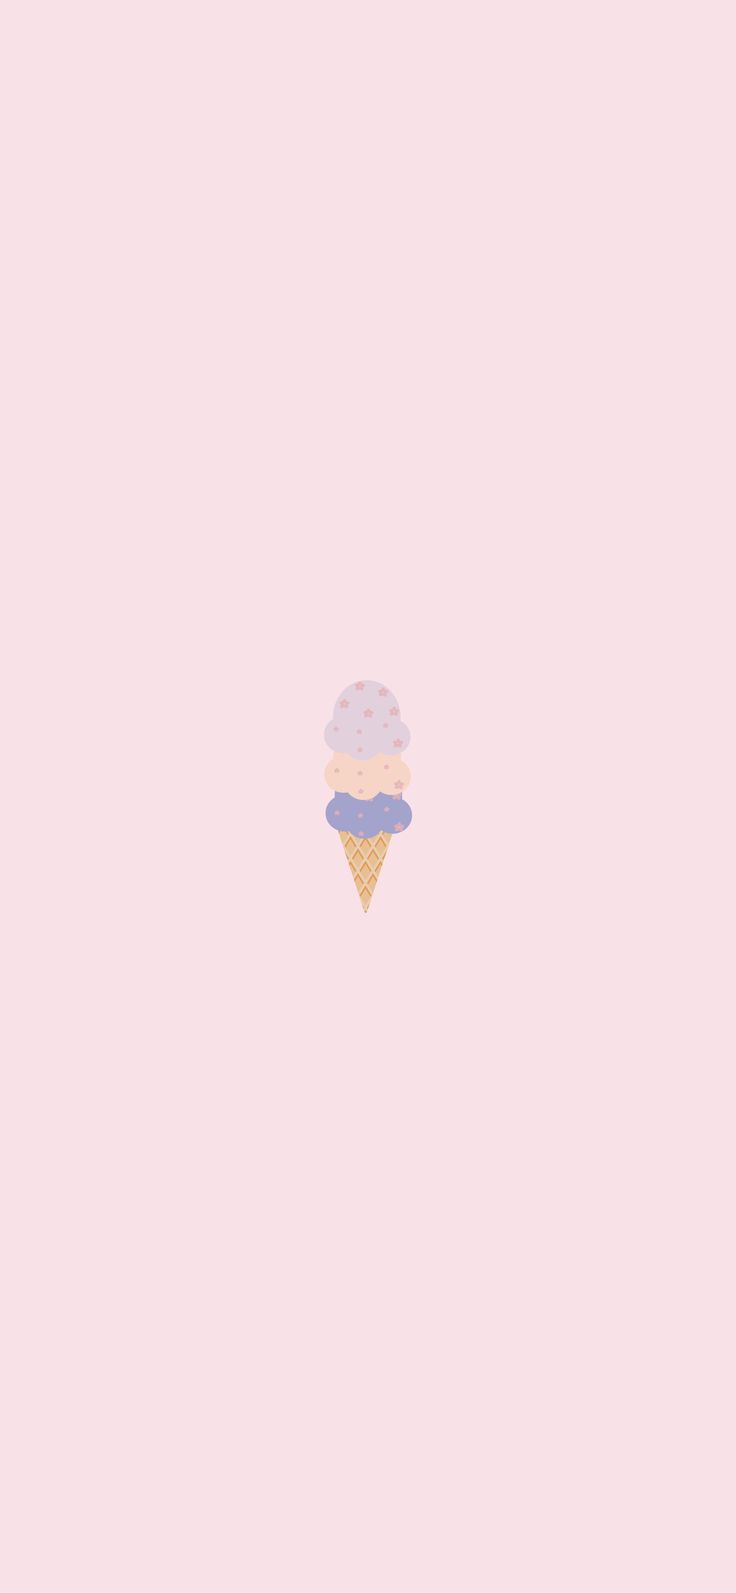 Ice cream. Instagram wallpaper, Kawaii wallpaper, Pretty wallpaper